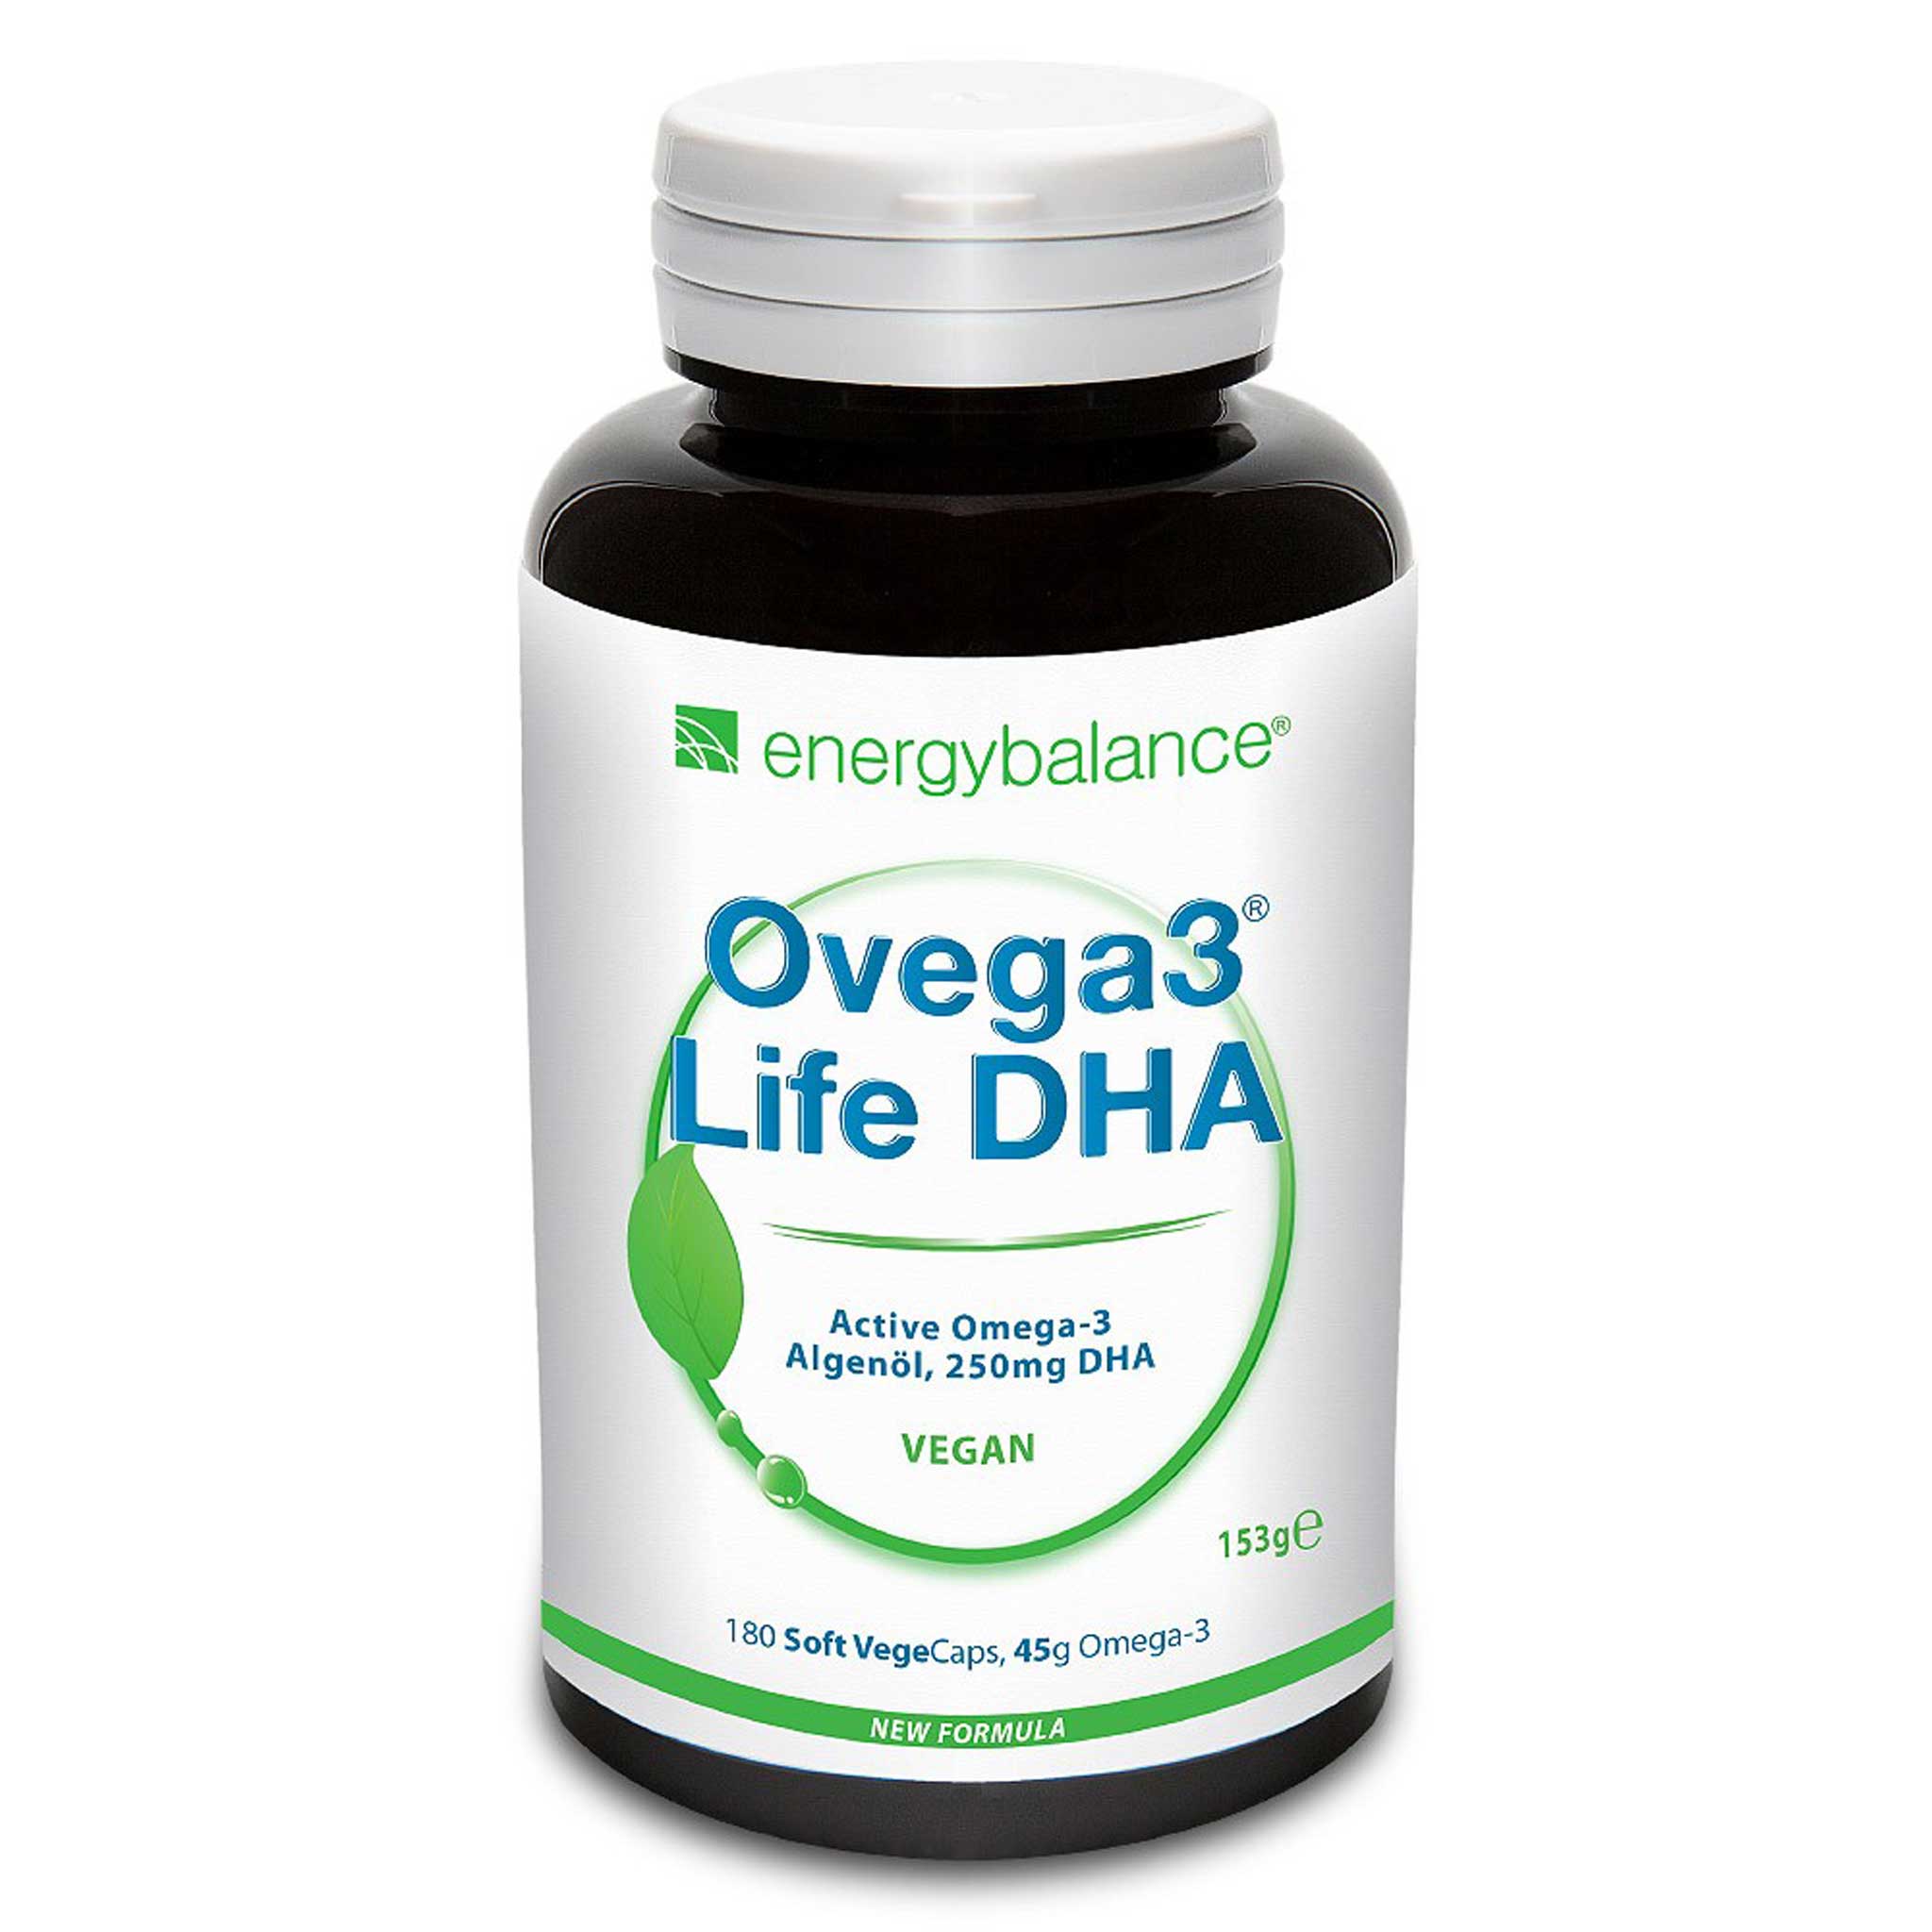 Ovega3 life DHA algae oil, 180 capsules